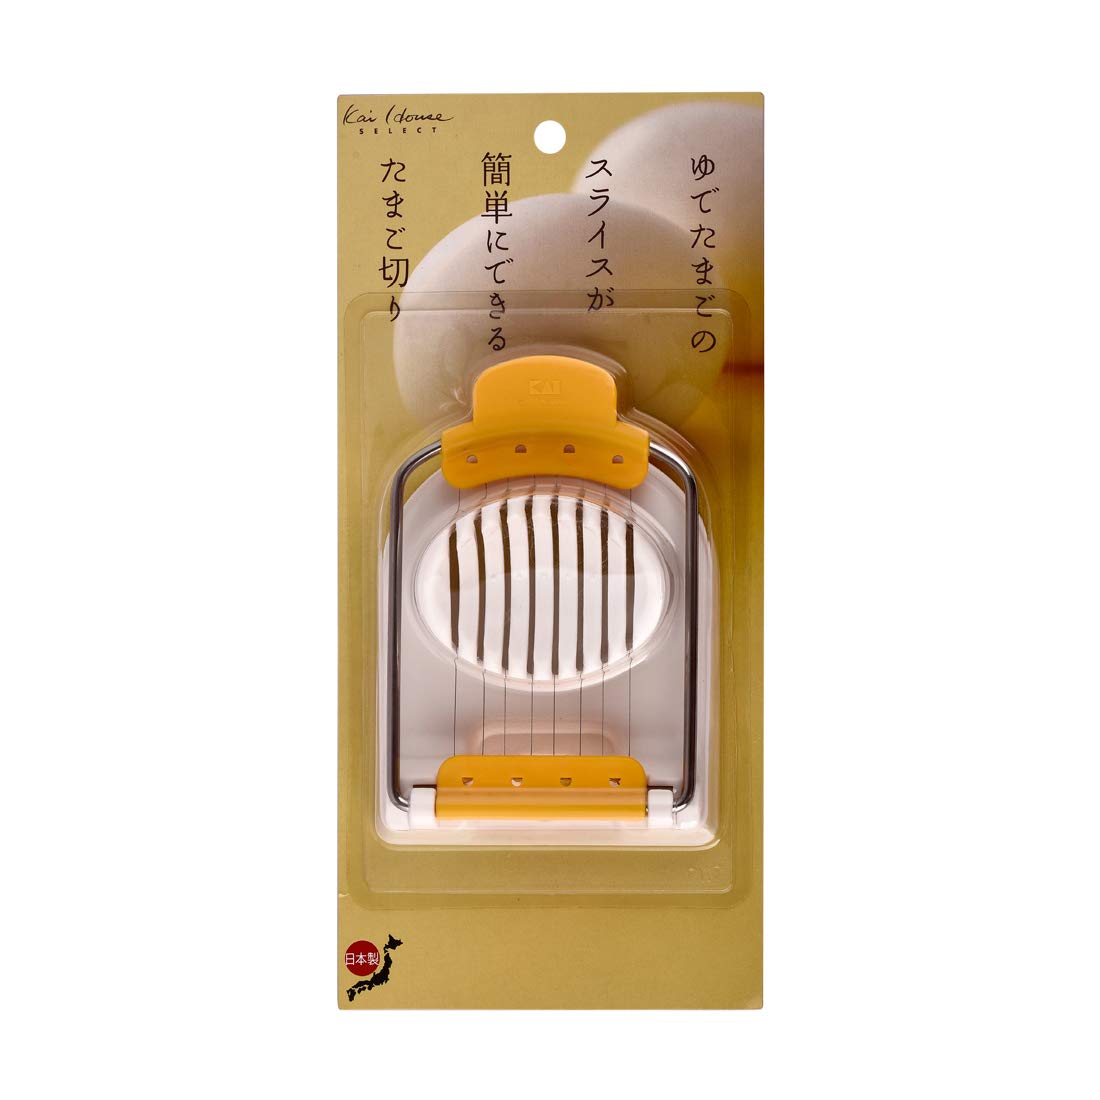 Kai Japan Stainless Steel Egg Slicer, White & Yellow